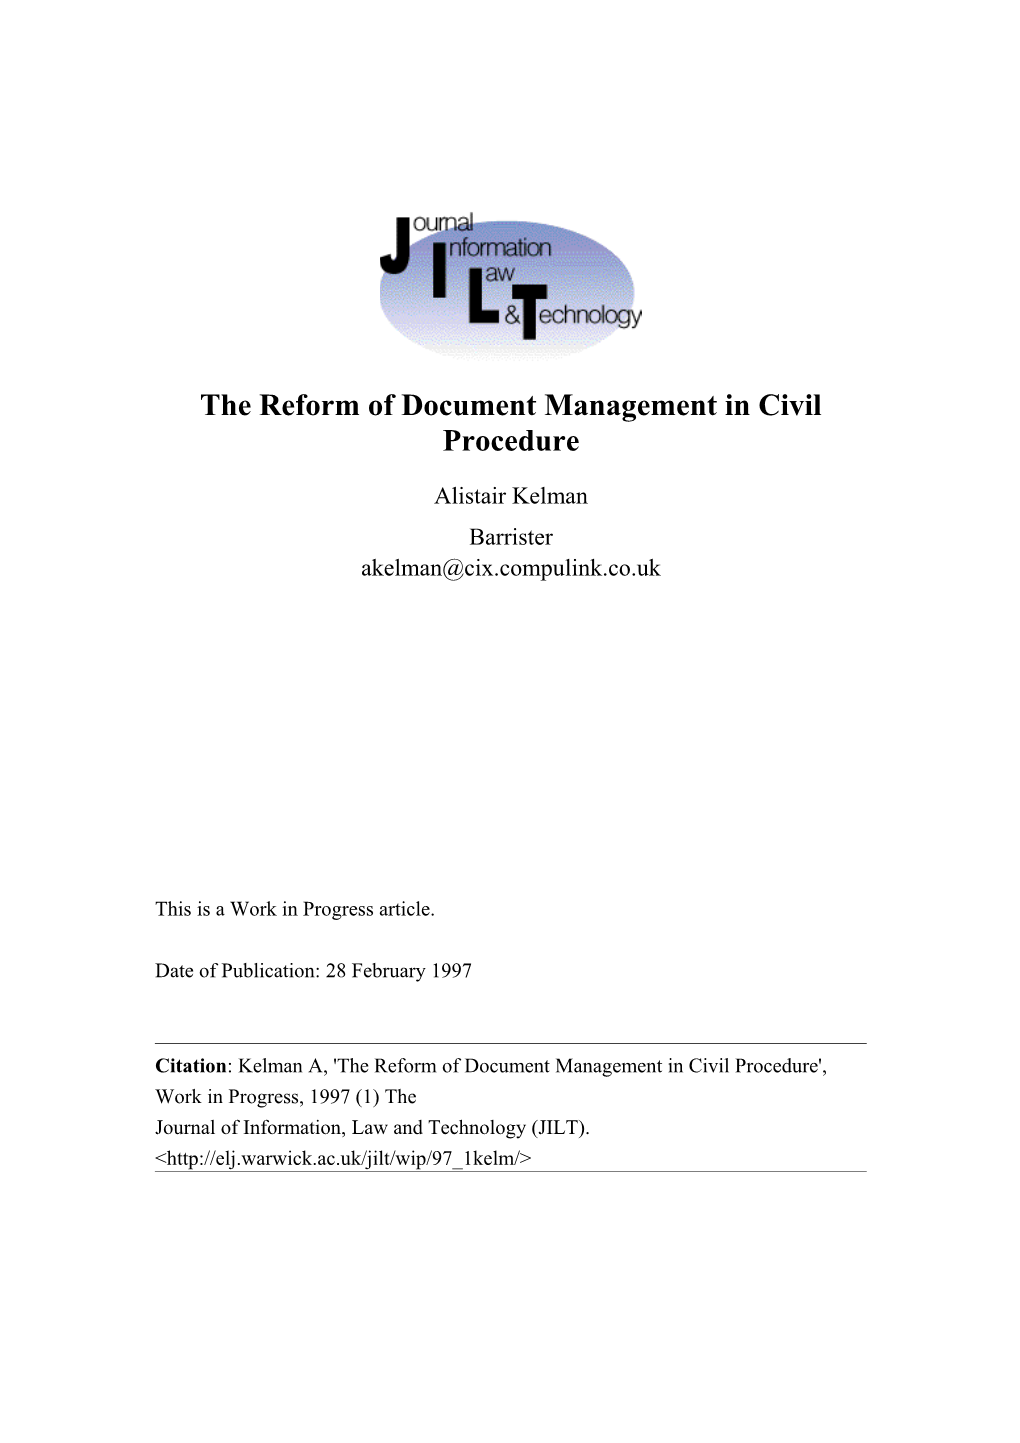 The Reform of Document Management in Civil Procedure